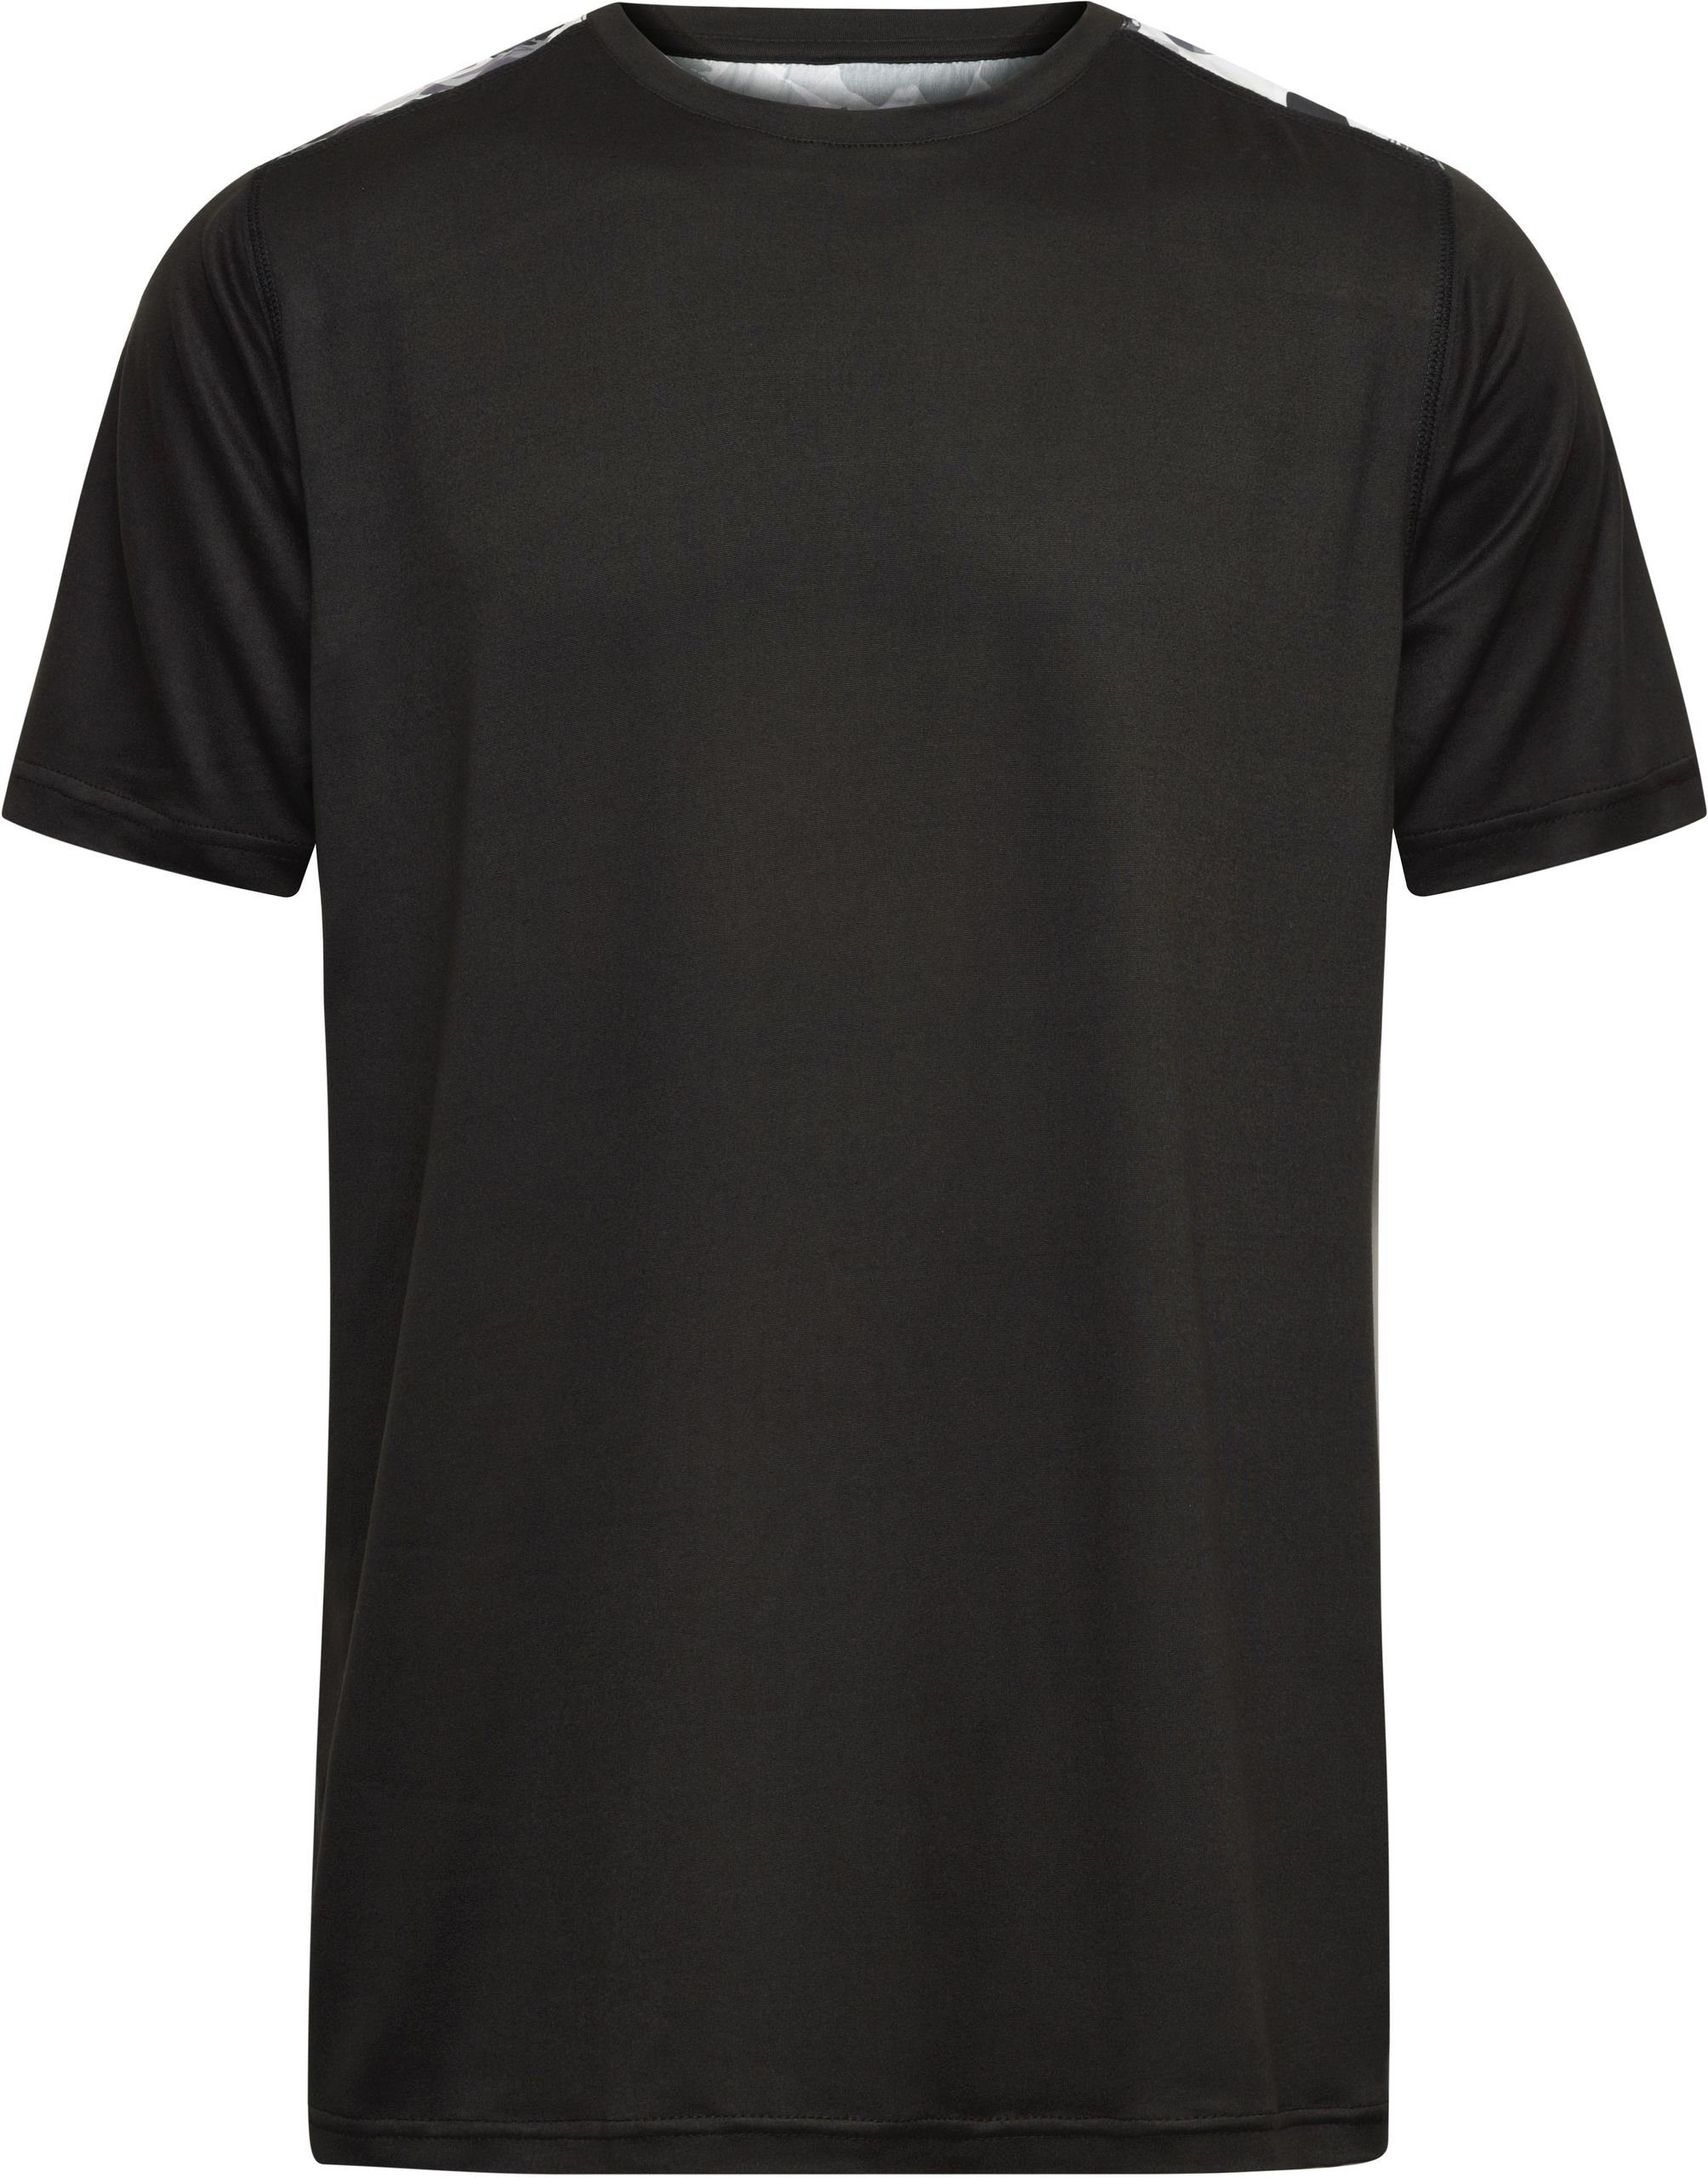 aus black/black printed & recyceltem FaS50524 Shirt Trainingsshirt Sport Nicholson James Polyester